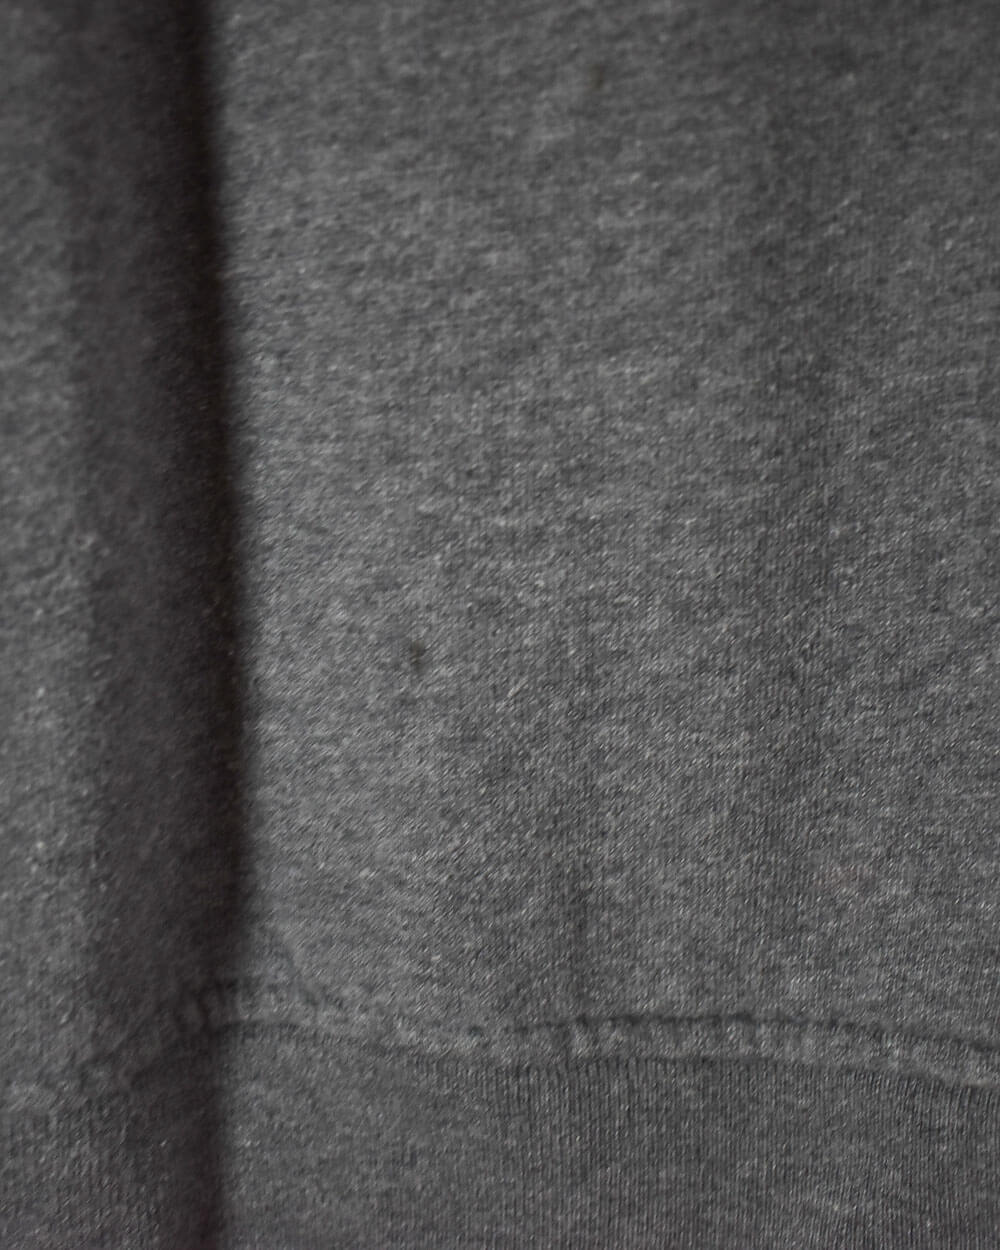 Grey Tommy Hilfiger Sweatshirt - Large